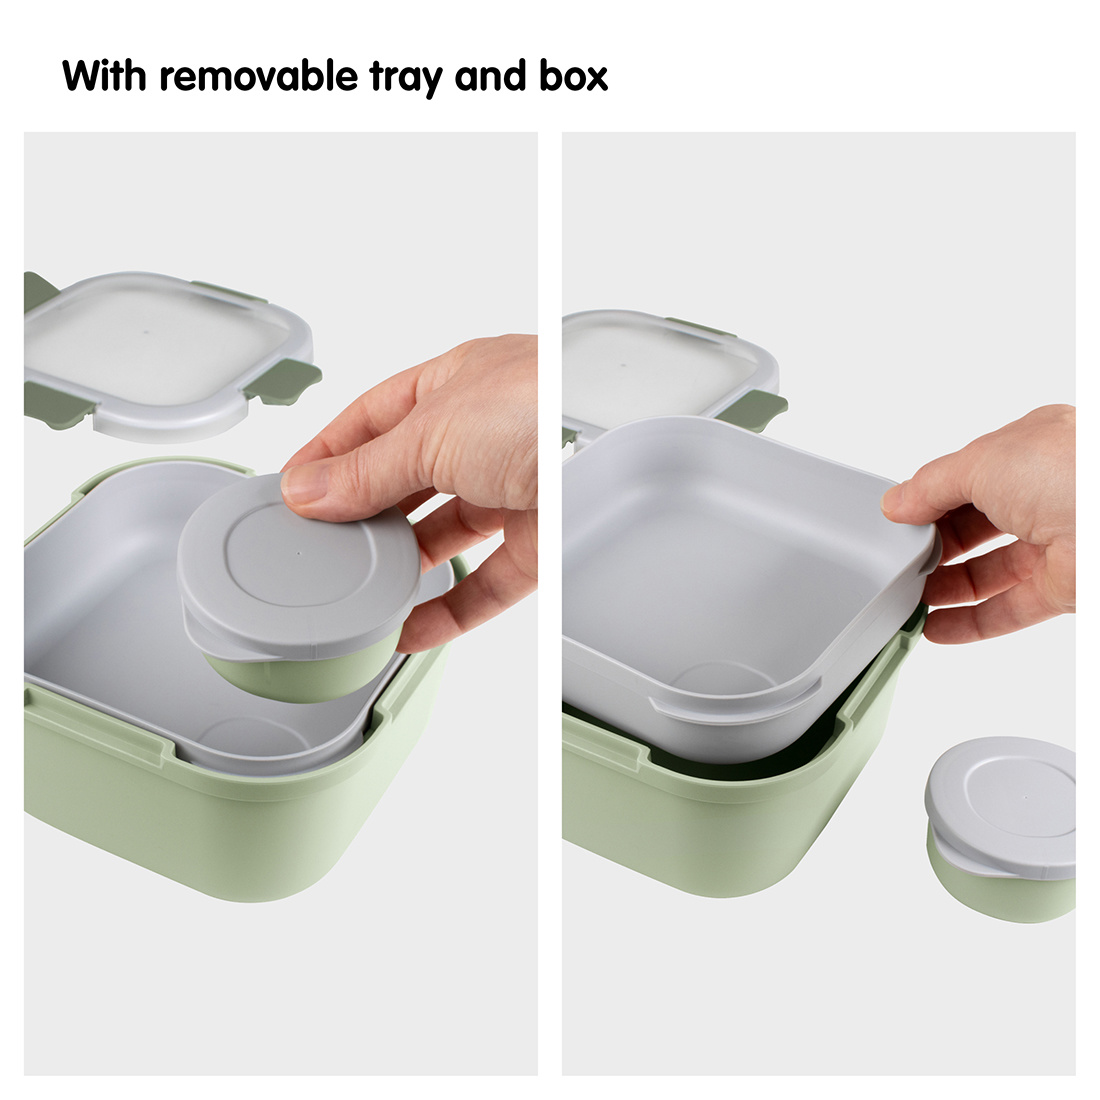 Sigma Home Food to go Lunchbox grün dunkelgrün